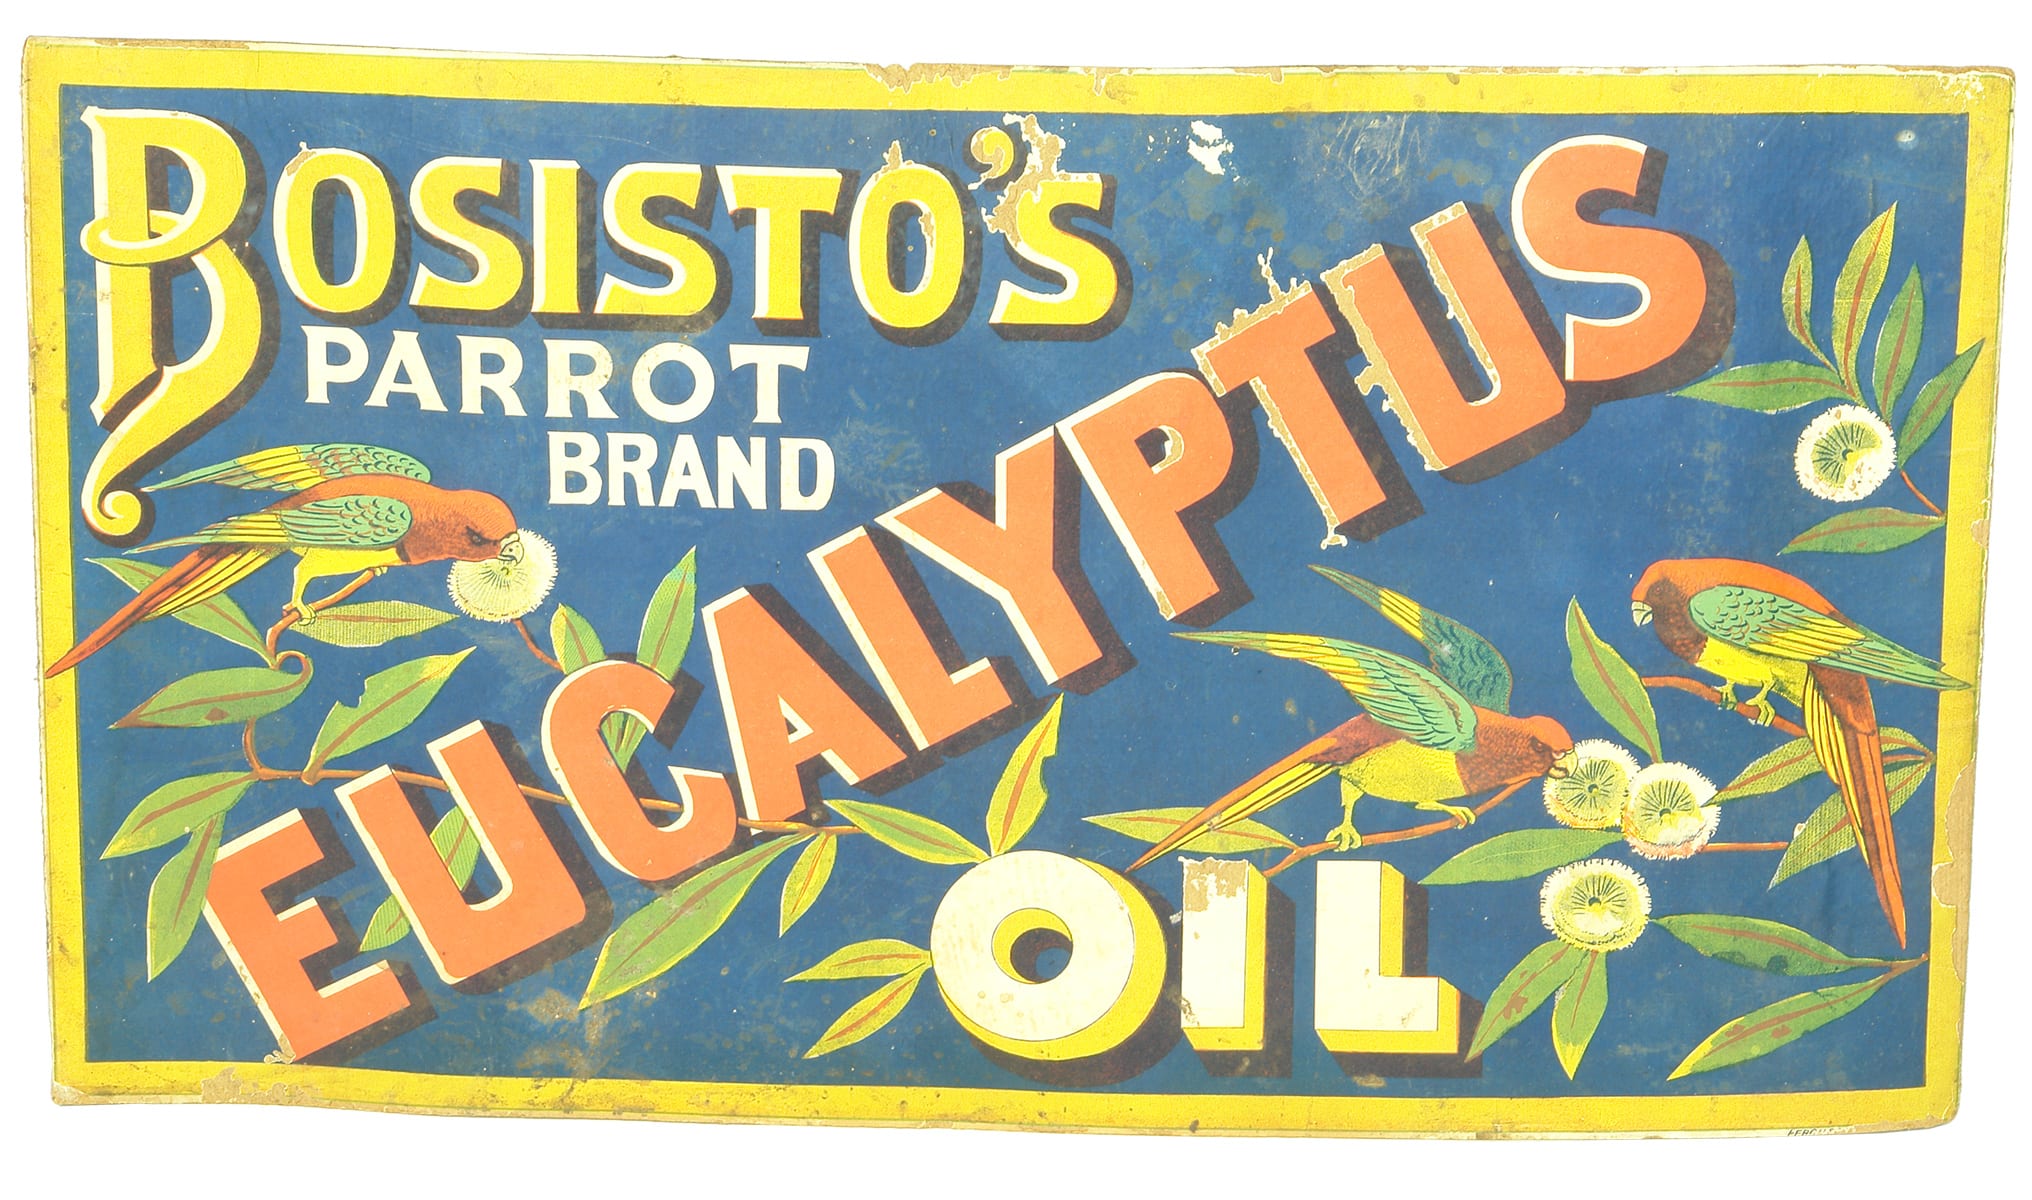 Bosistos Parrot Brand Eucalyptus Oil Advertising Poster